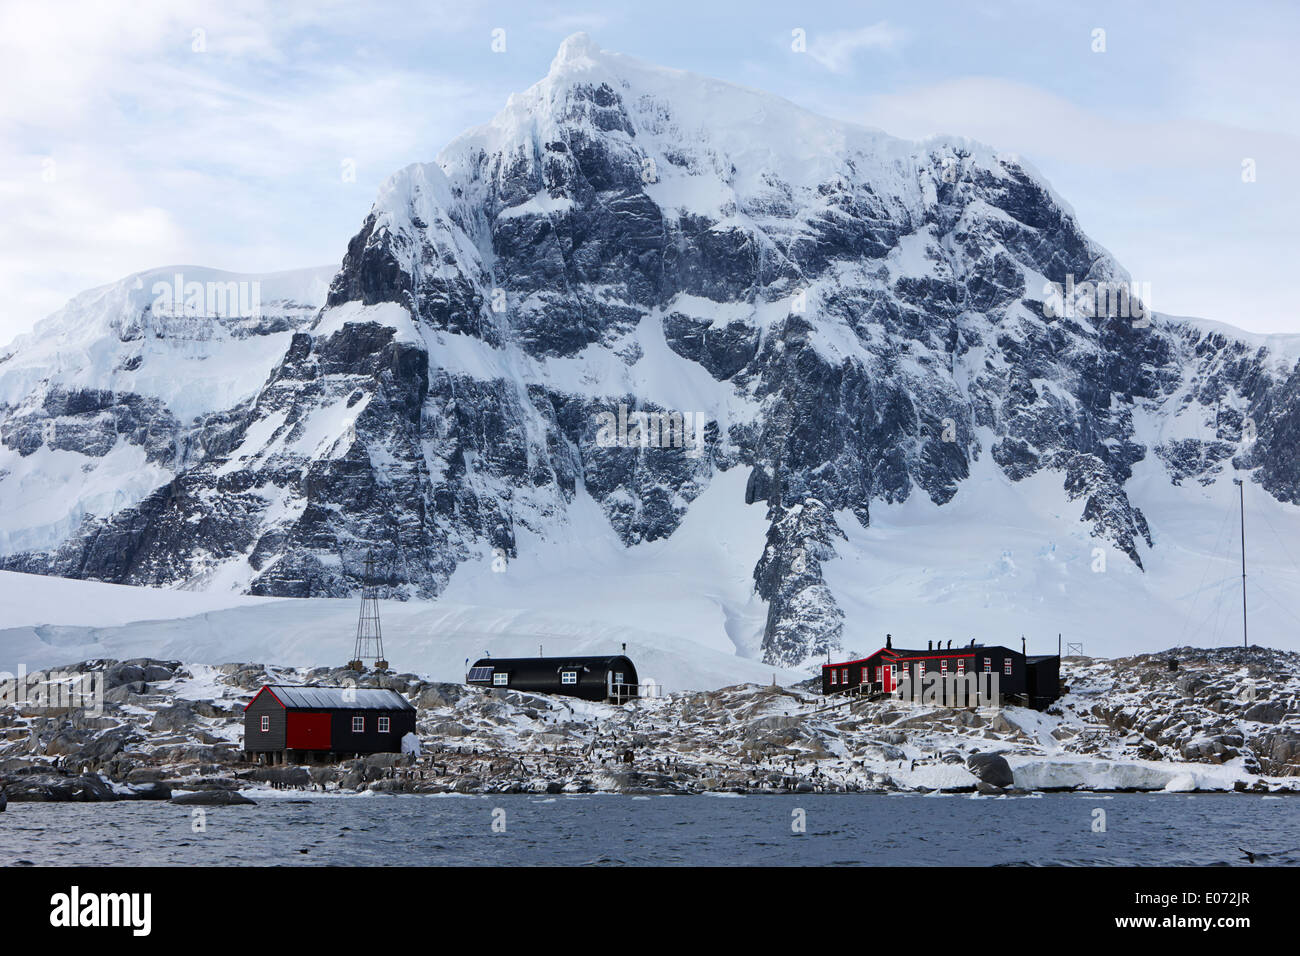 port lockroy british antarctic heritage trust station on goudier island with luigi peak in the background Antarctica Stock Photo